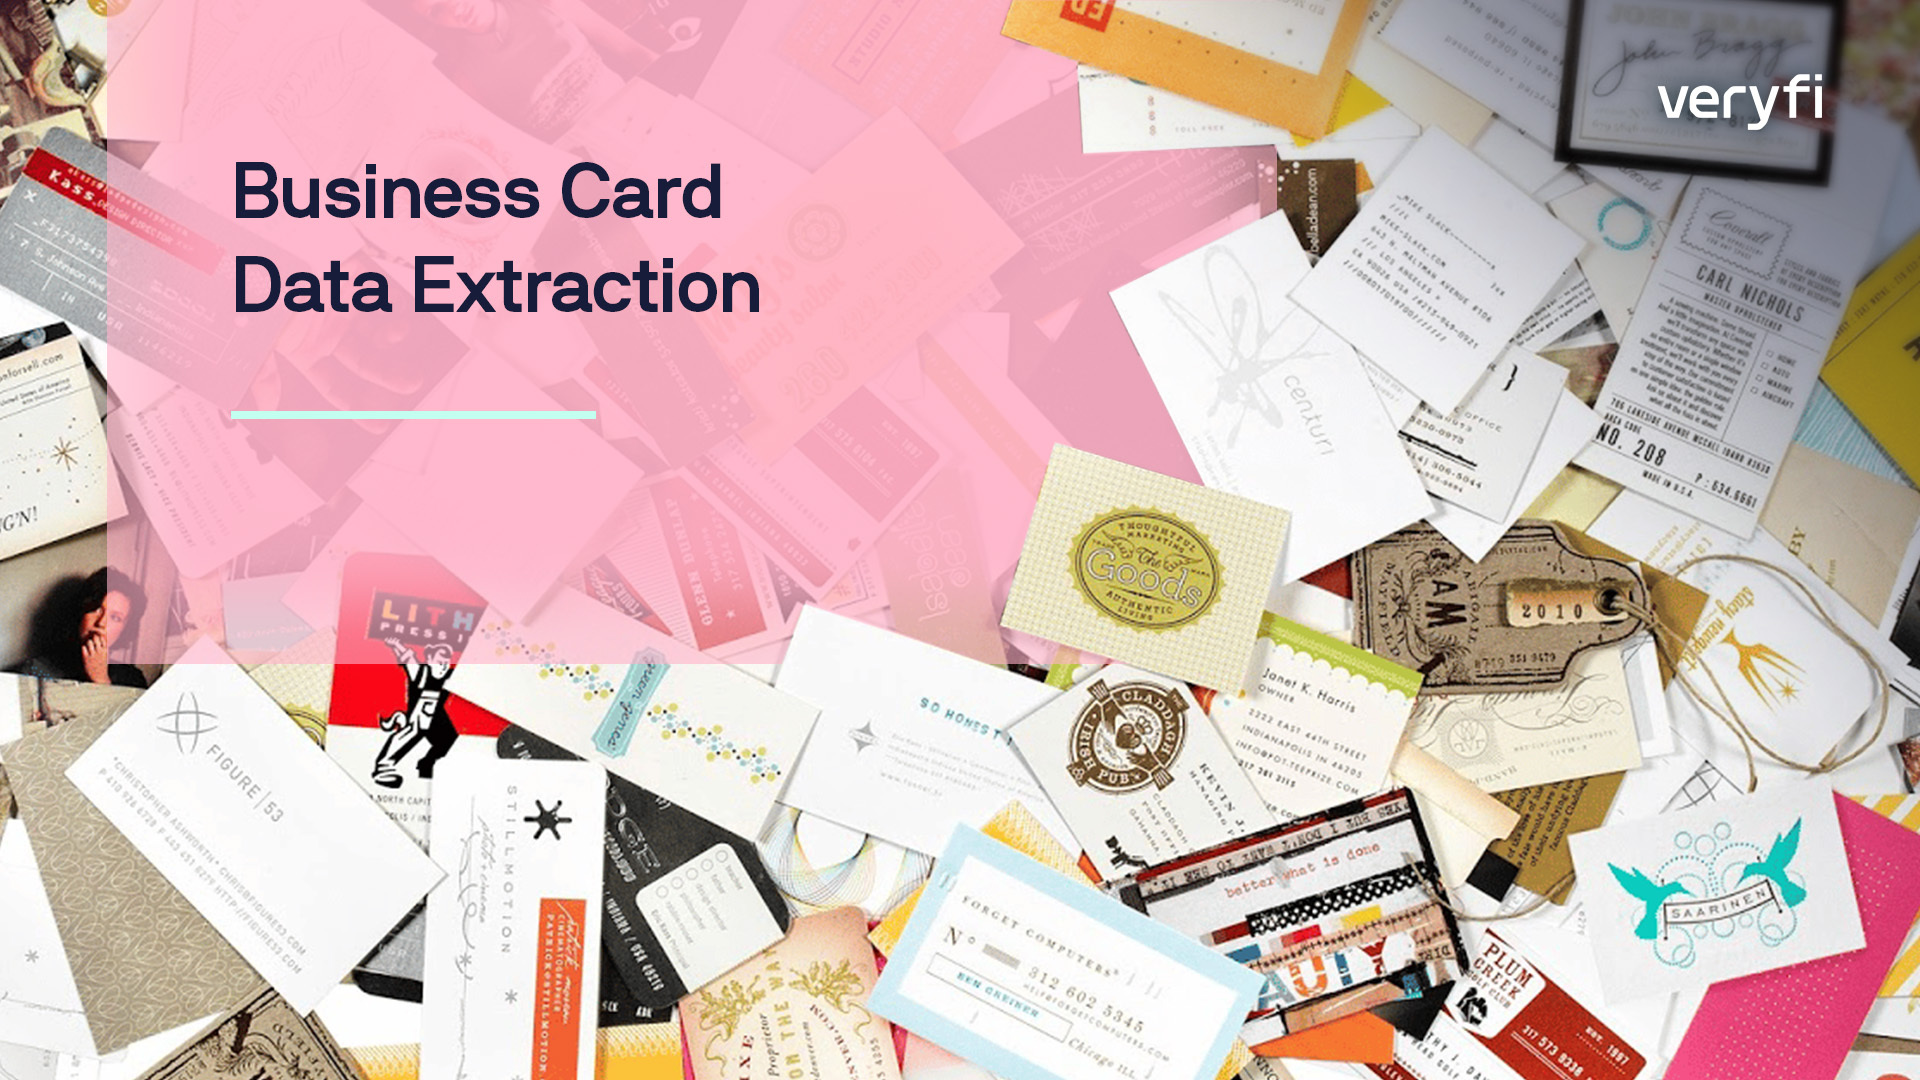 Numerous business cards strewn on a table.